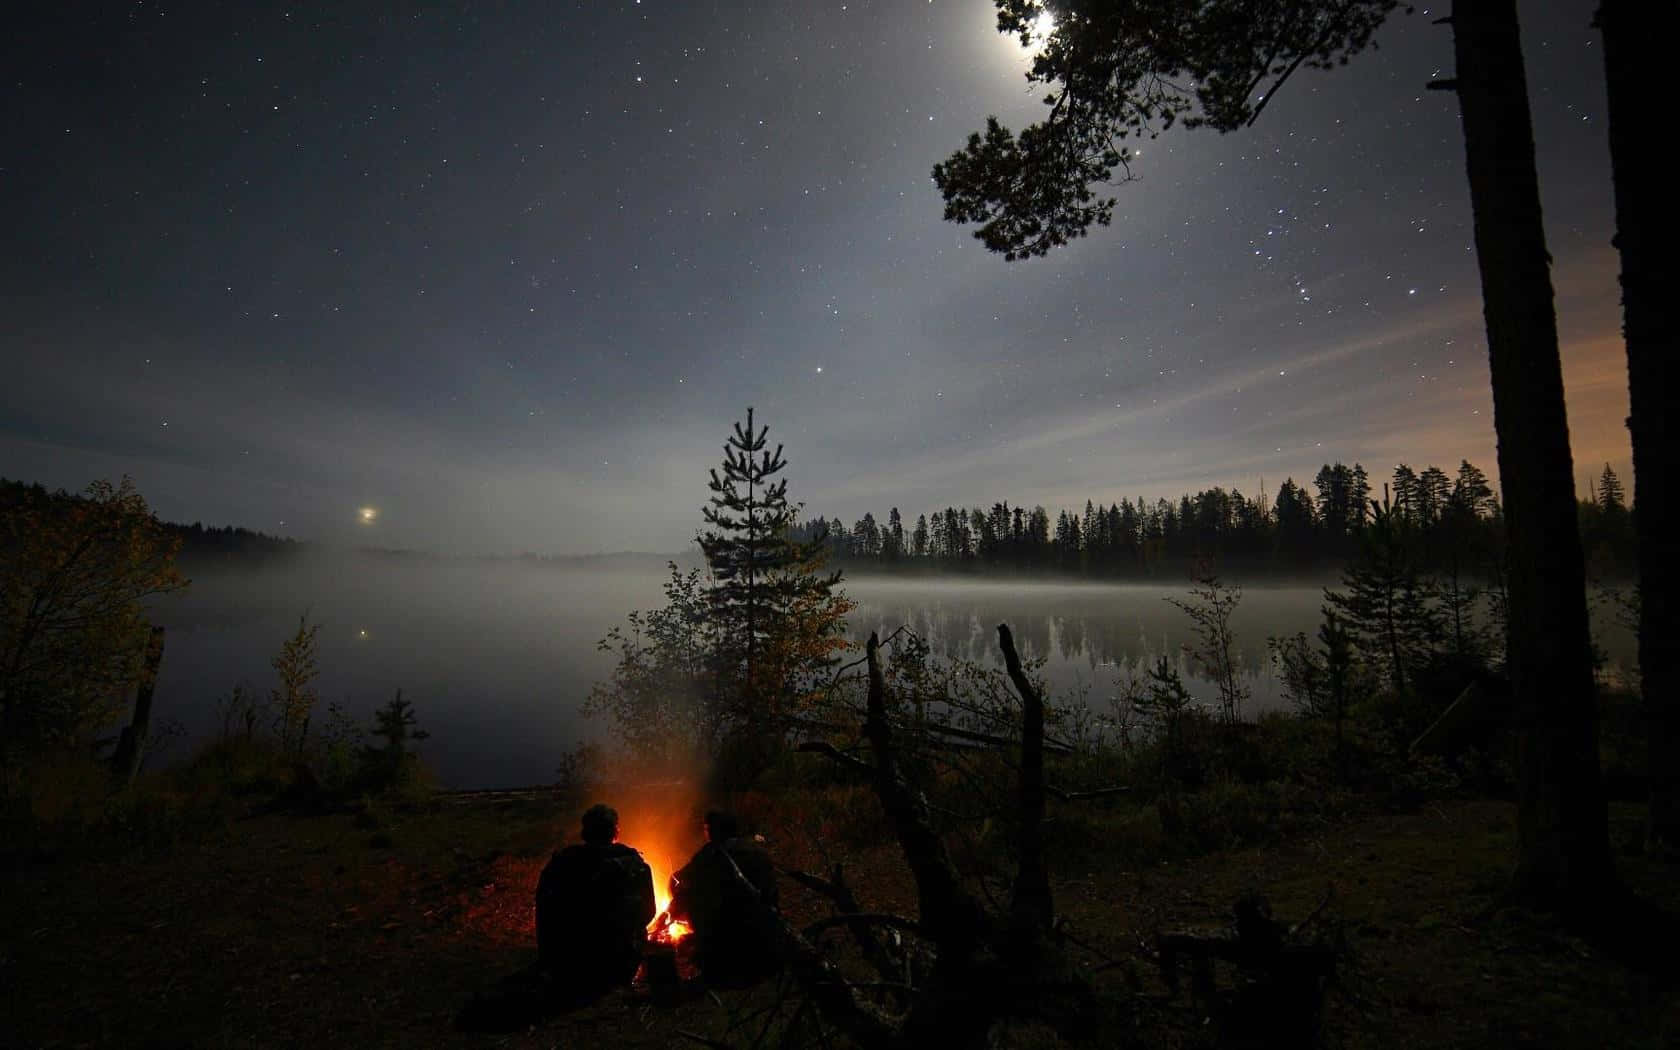 A cozy campfire under the starry night sky